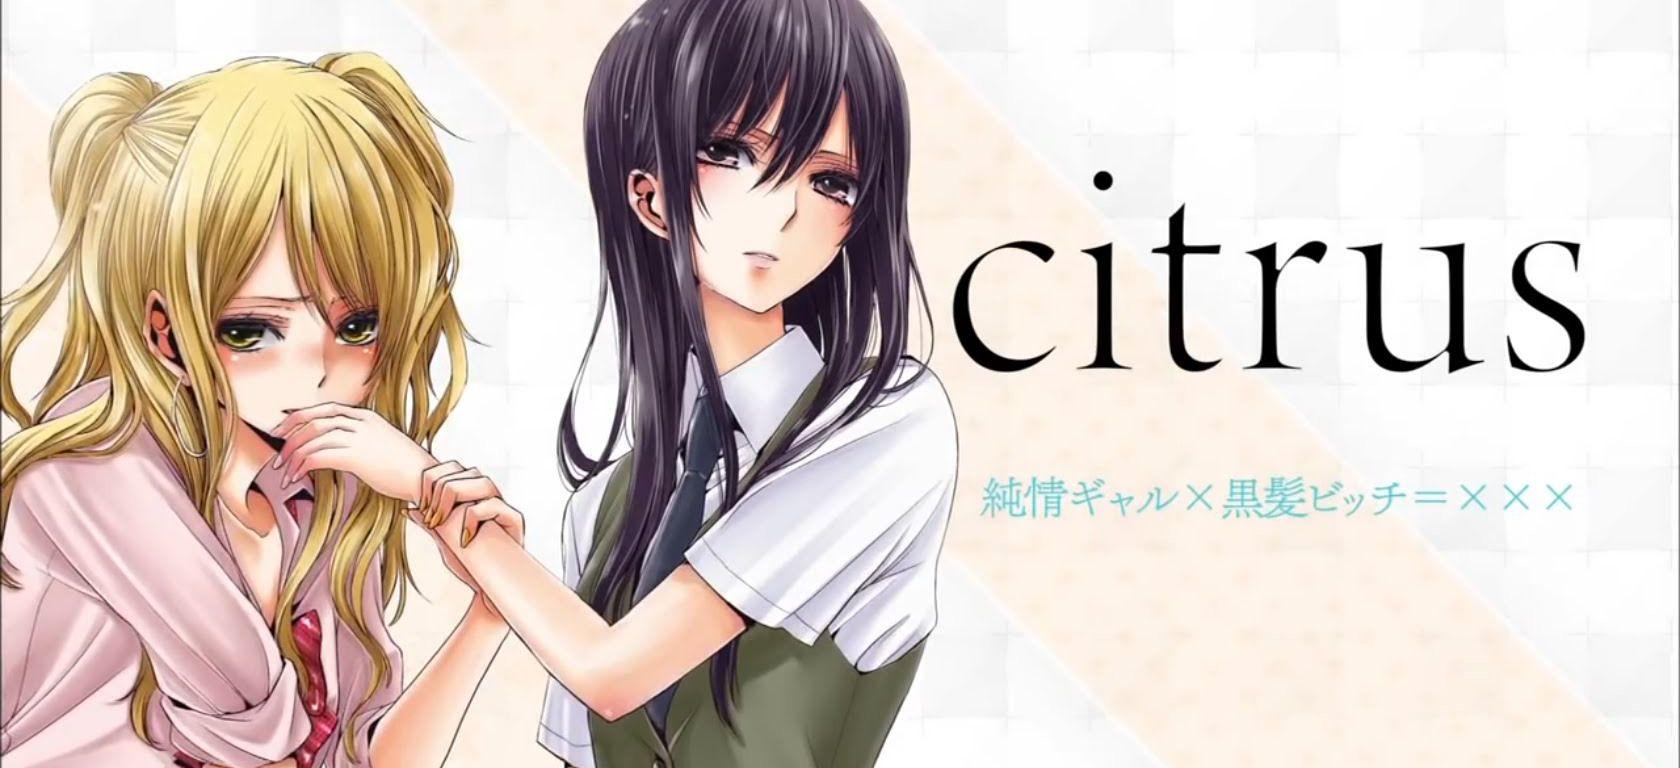 Yuri anime “Citrus” reveals main cast